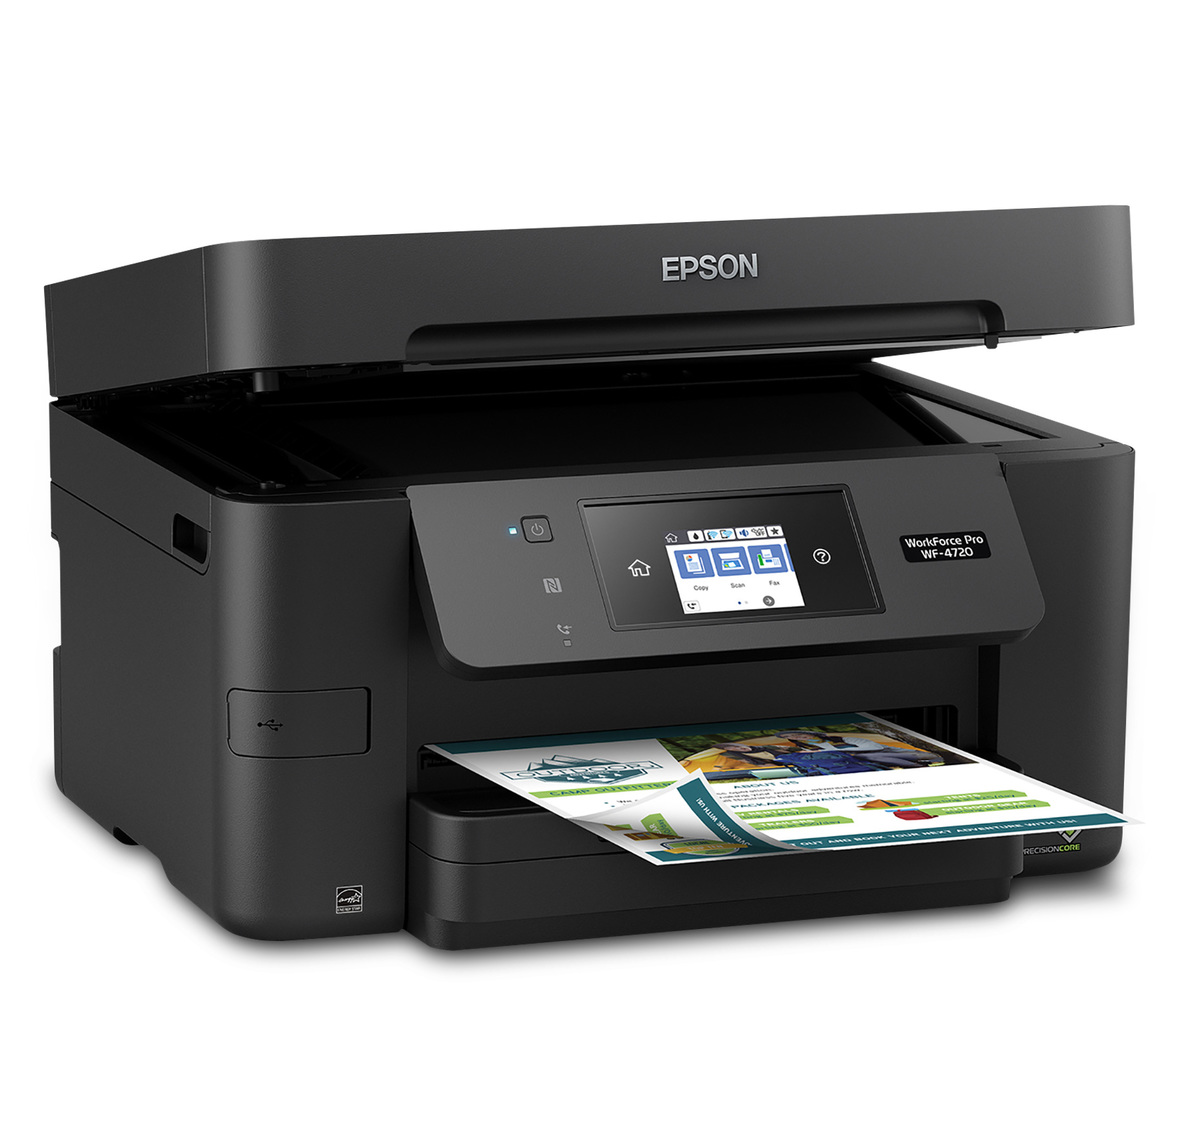 Epson WorkForce Pro WF-4720 All-in-One Printer